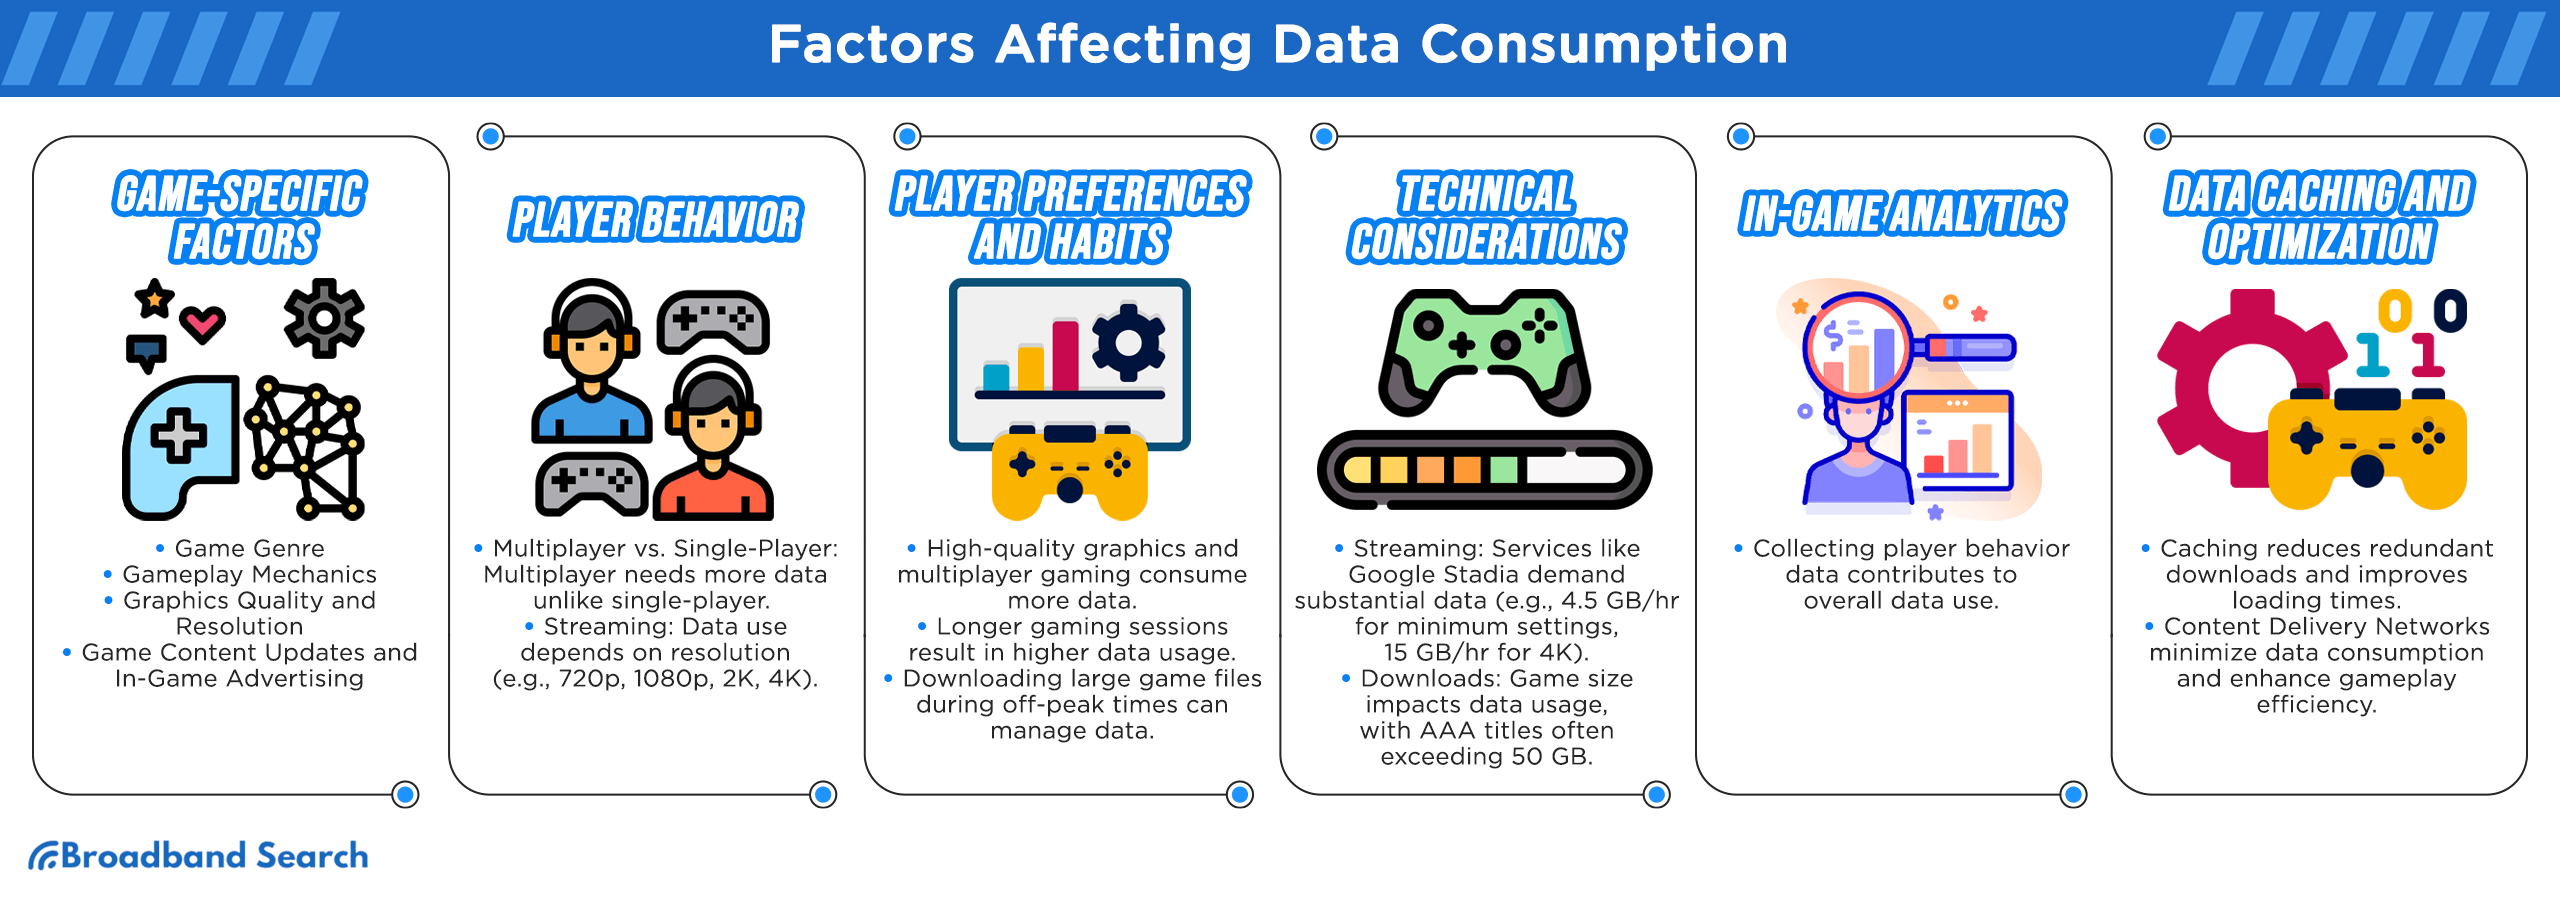 factors affecting data consumption